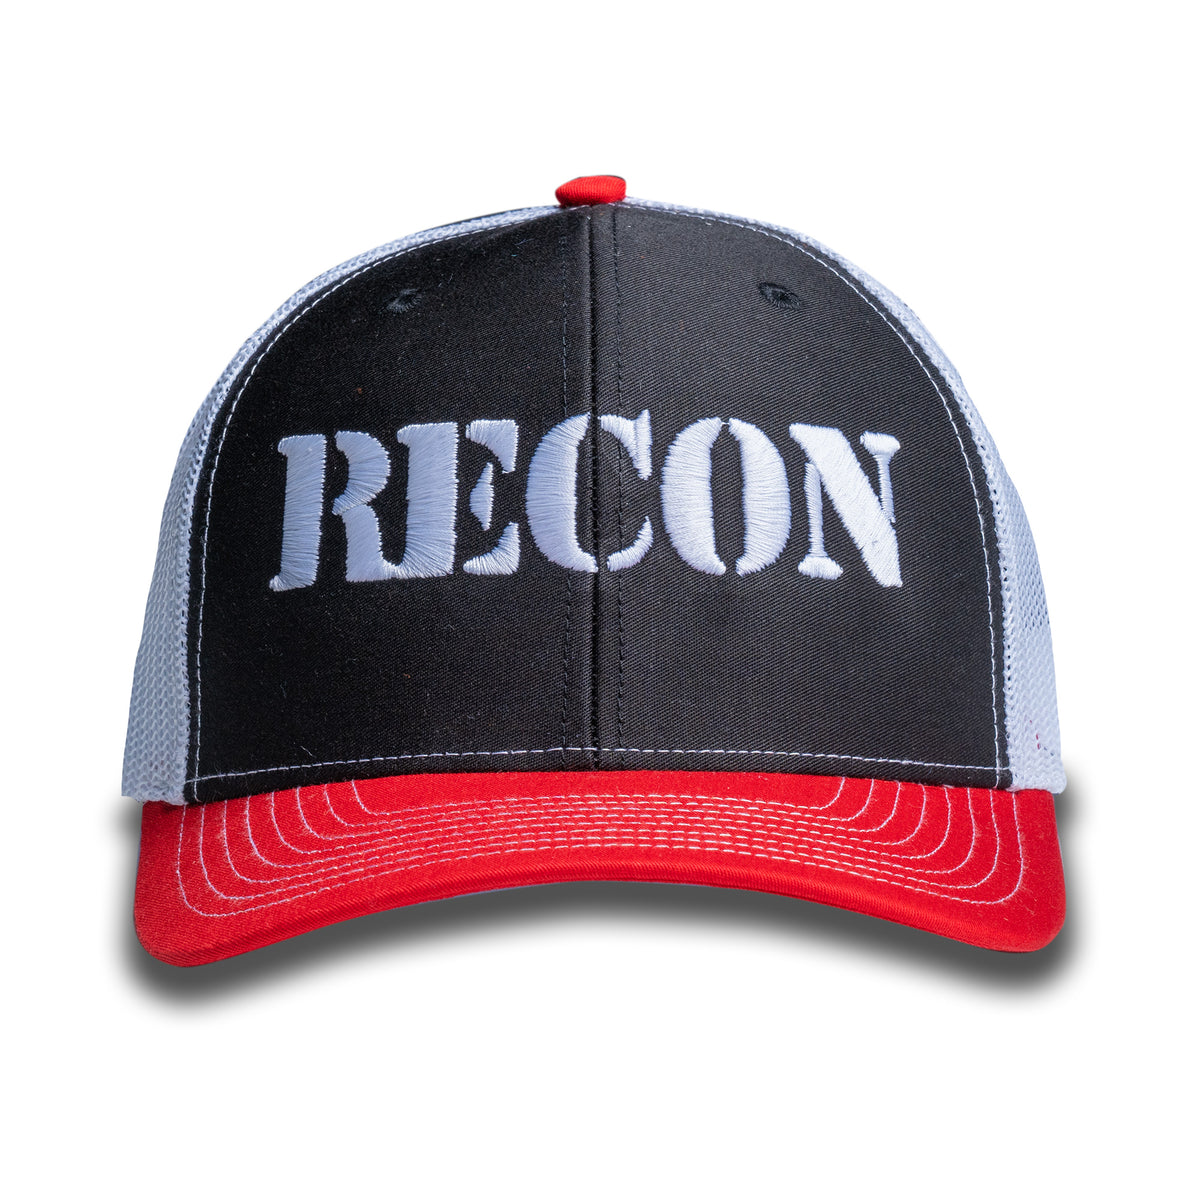 RECON Snapback Trucker Hat - Black/Red/White